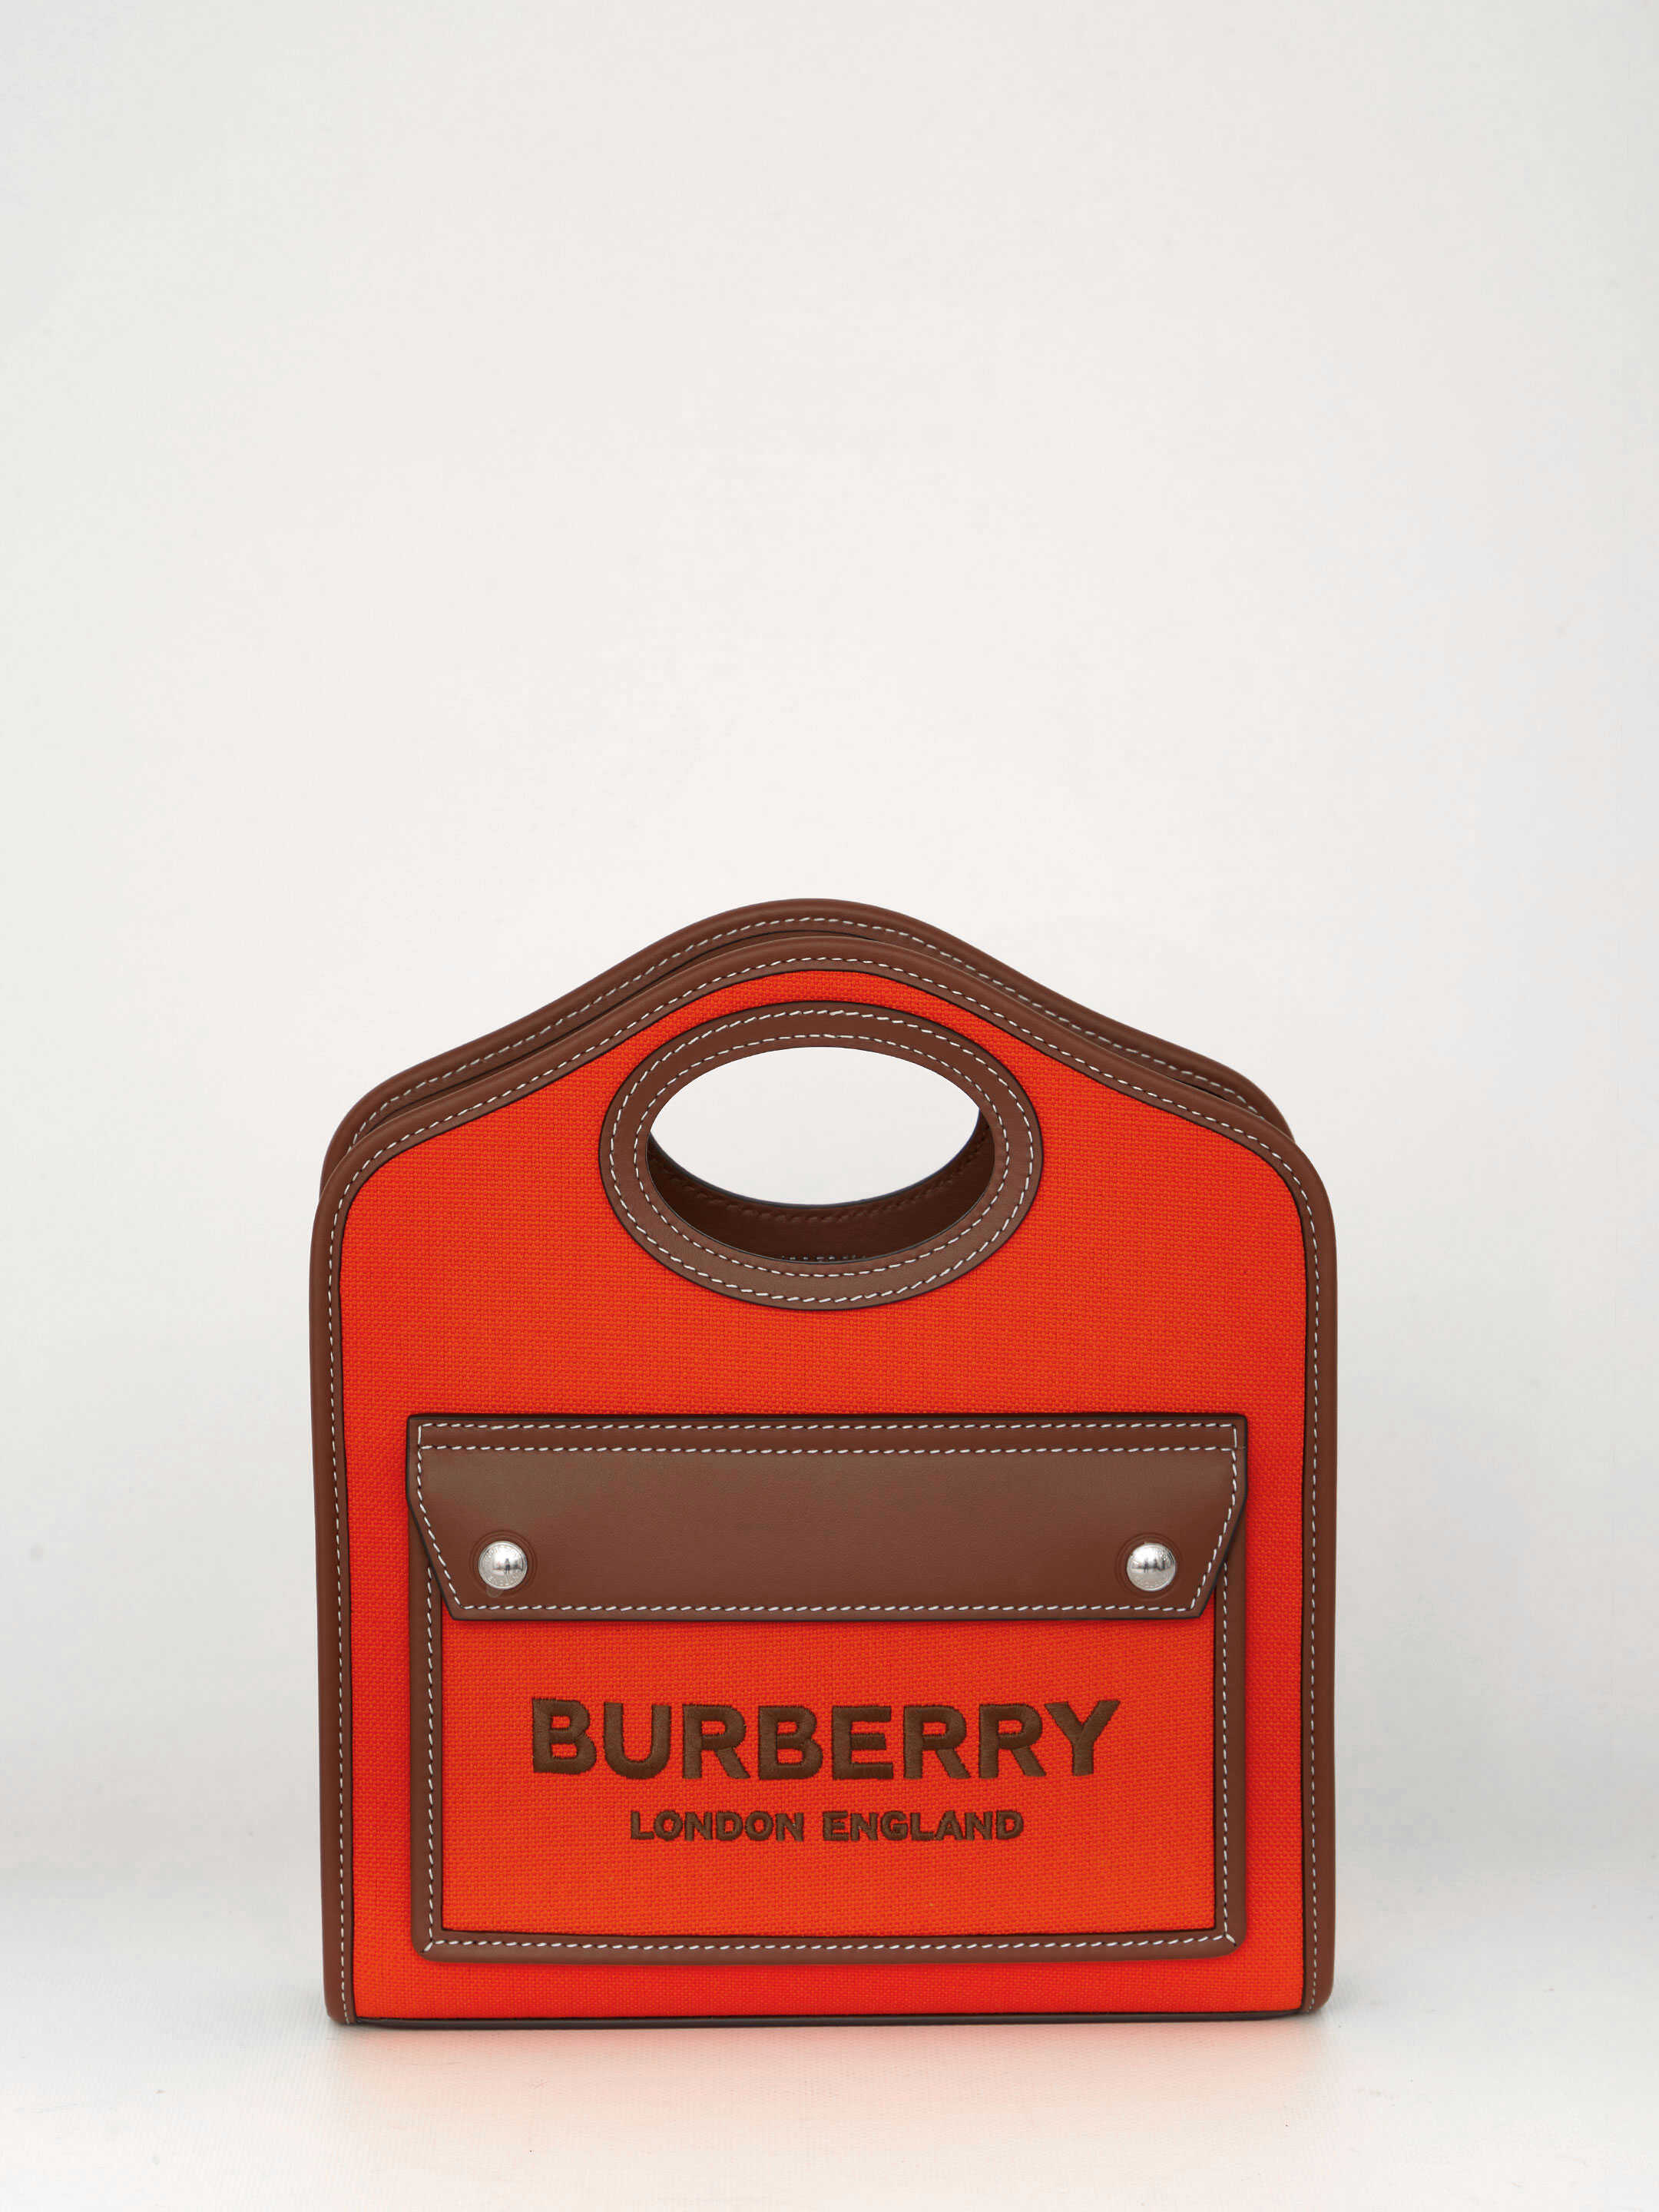 Burberry Pocket Mini Bag Orange image22